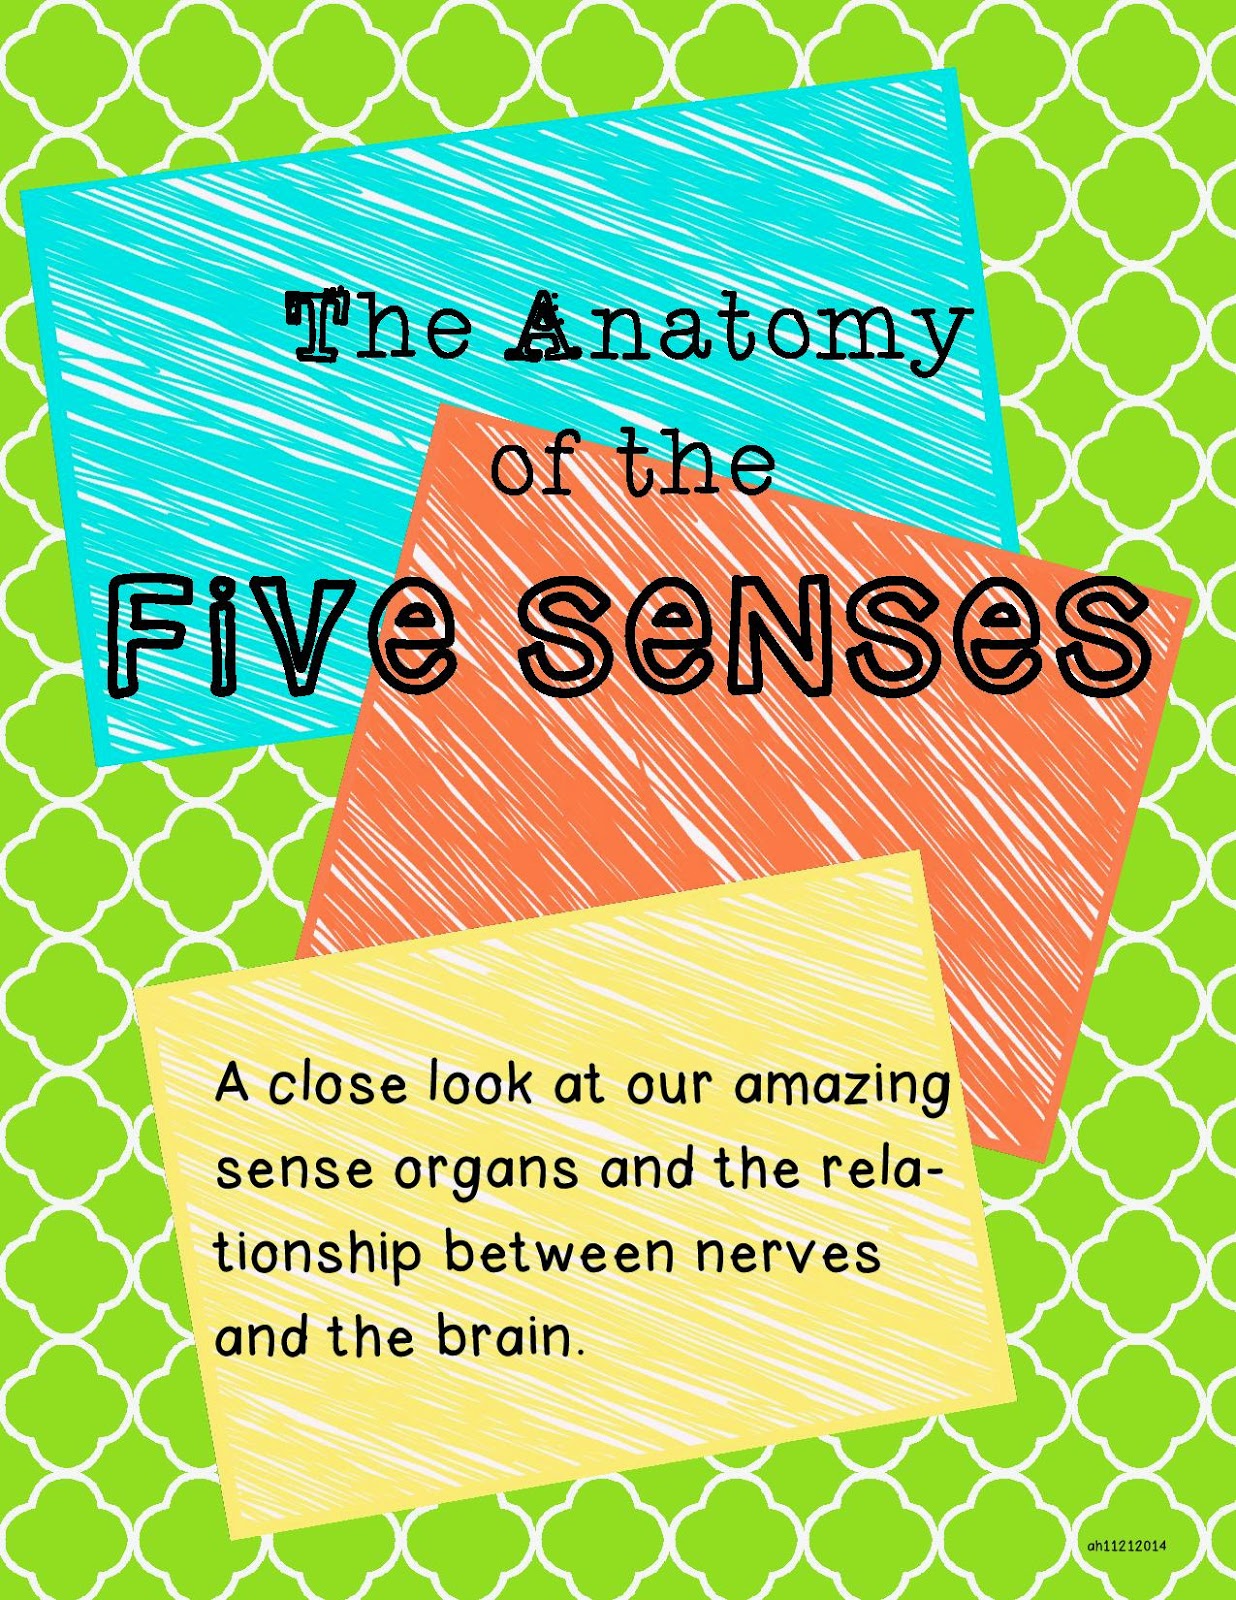 http://www.teacherspayteachers.com/Product/The-Anatomy-of-the-Five-Senses-1570566